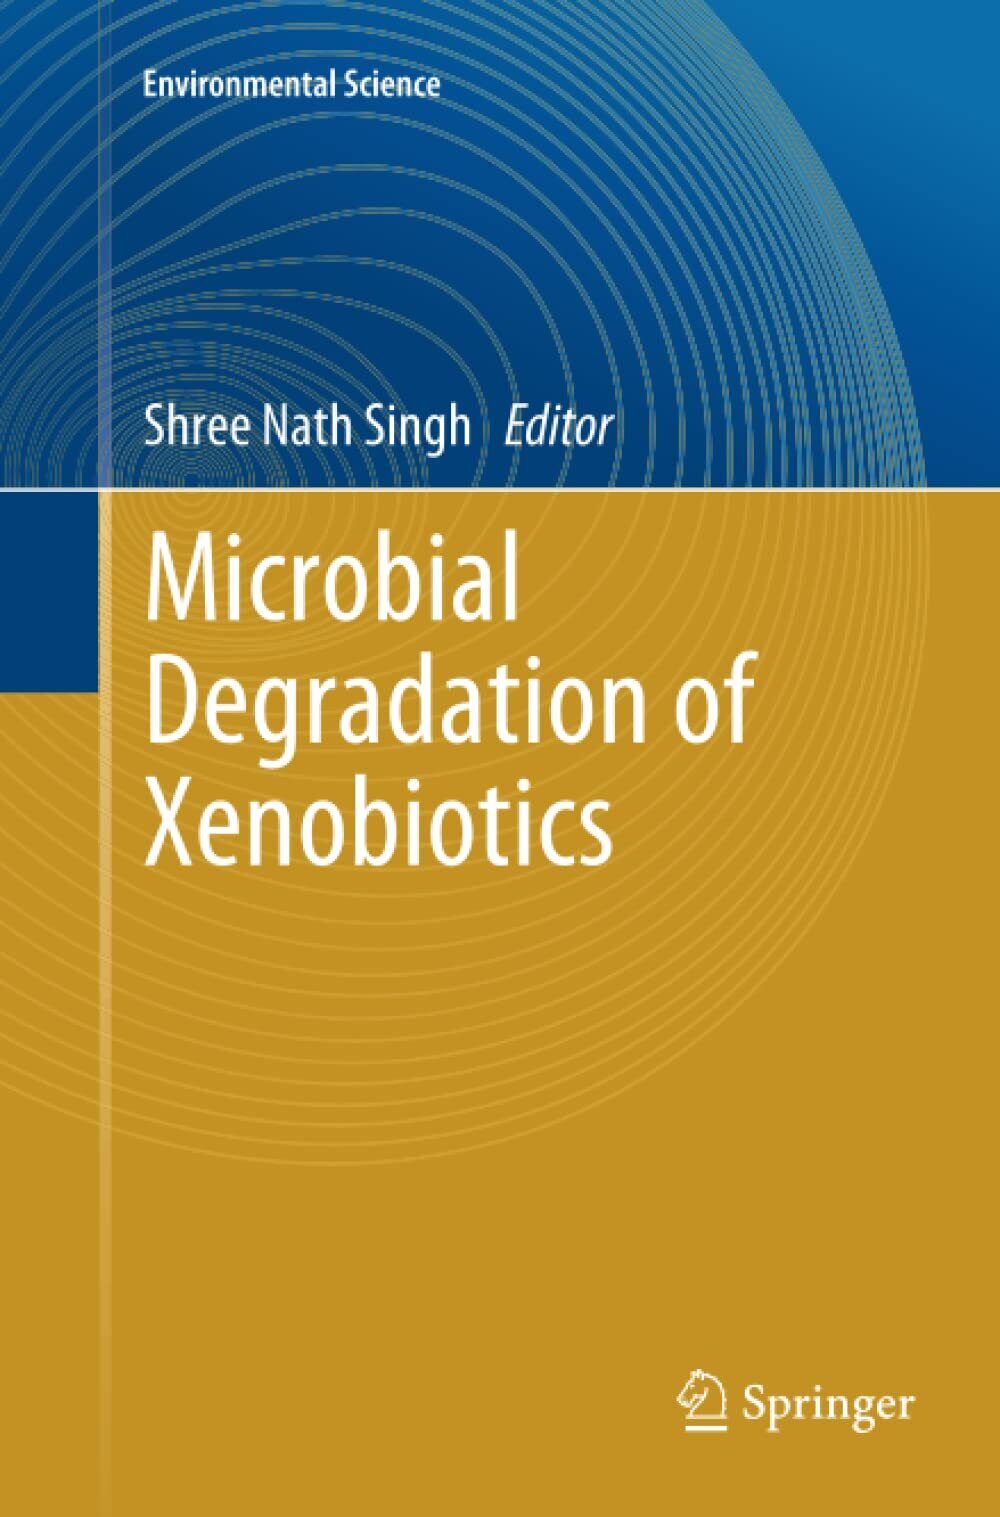 Microbial Degradation of Xenobiotics - Shree Nath Singh - Springer, 2013